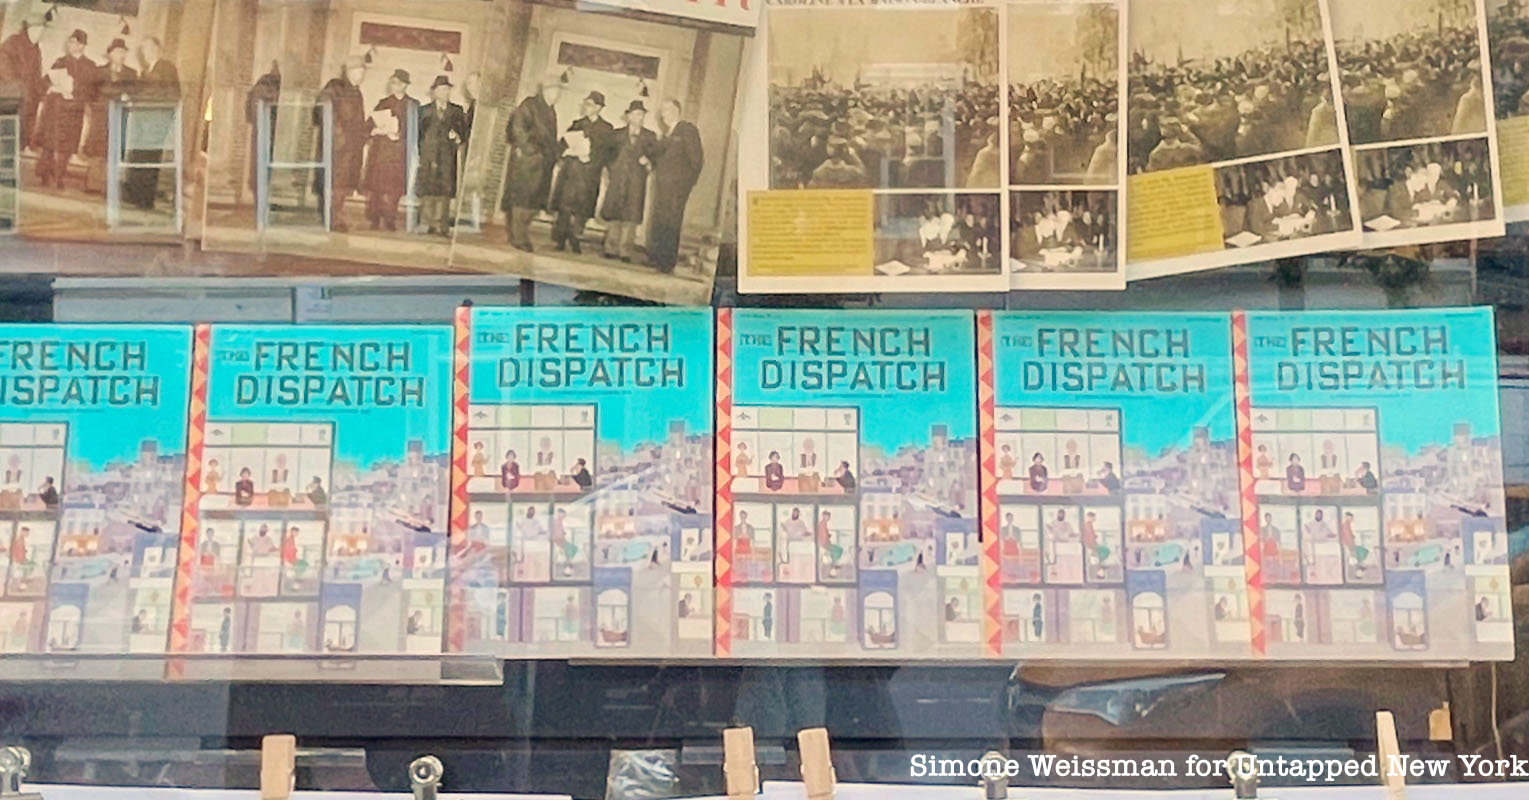 The French Dispatch magazine